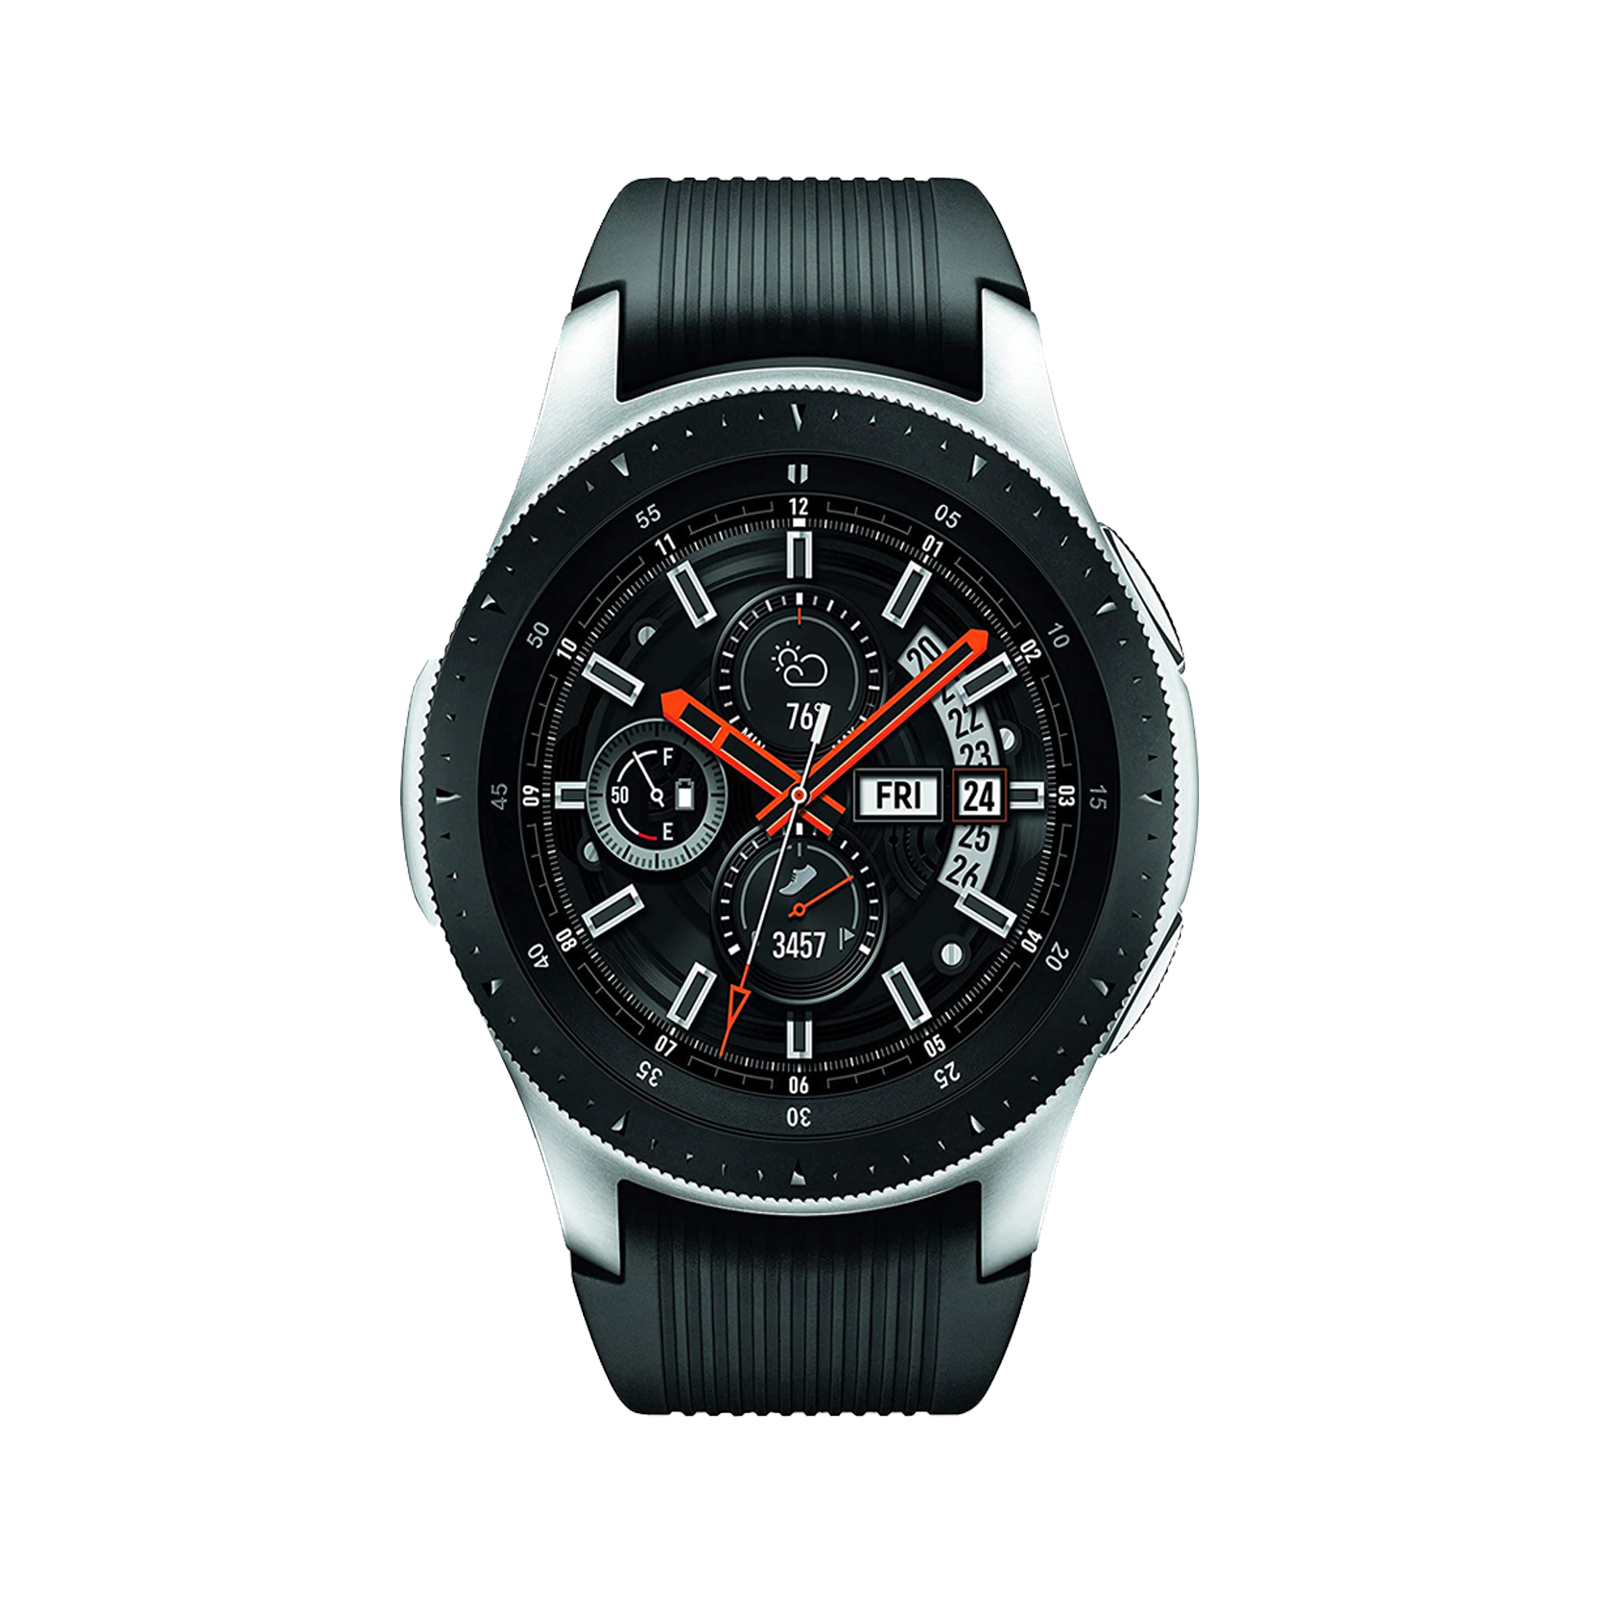 Samsung Galaxy Watch 46mm [Silver] [Brand New] [24M]